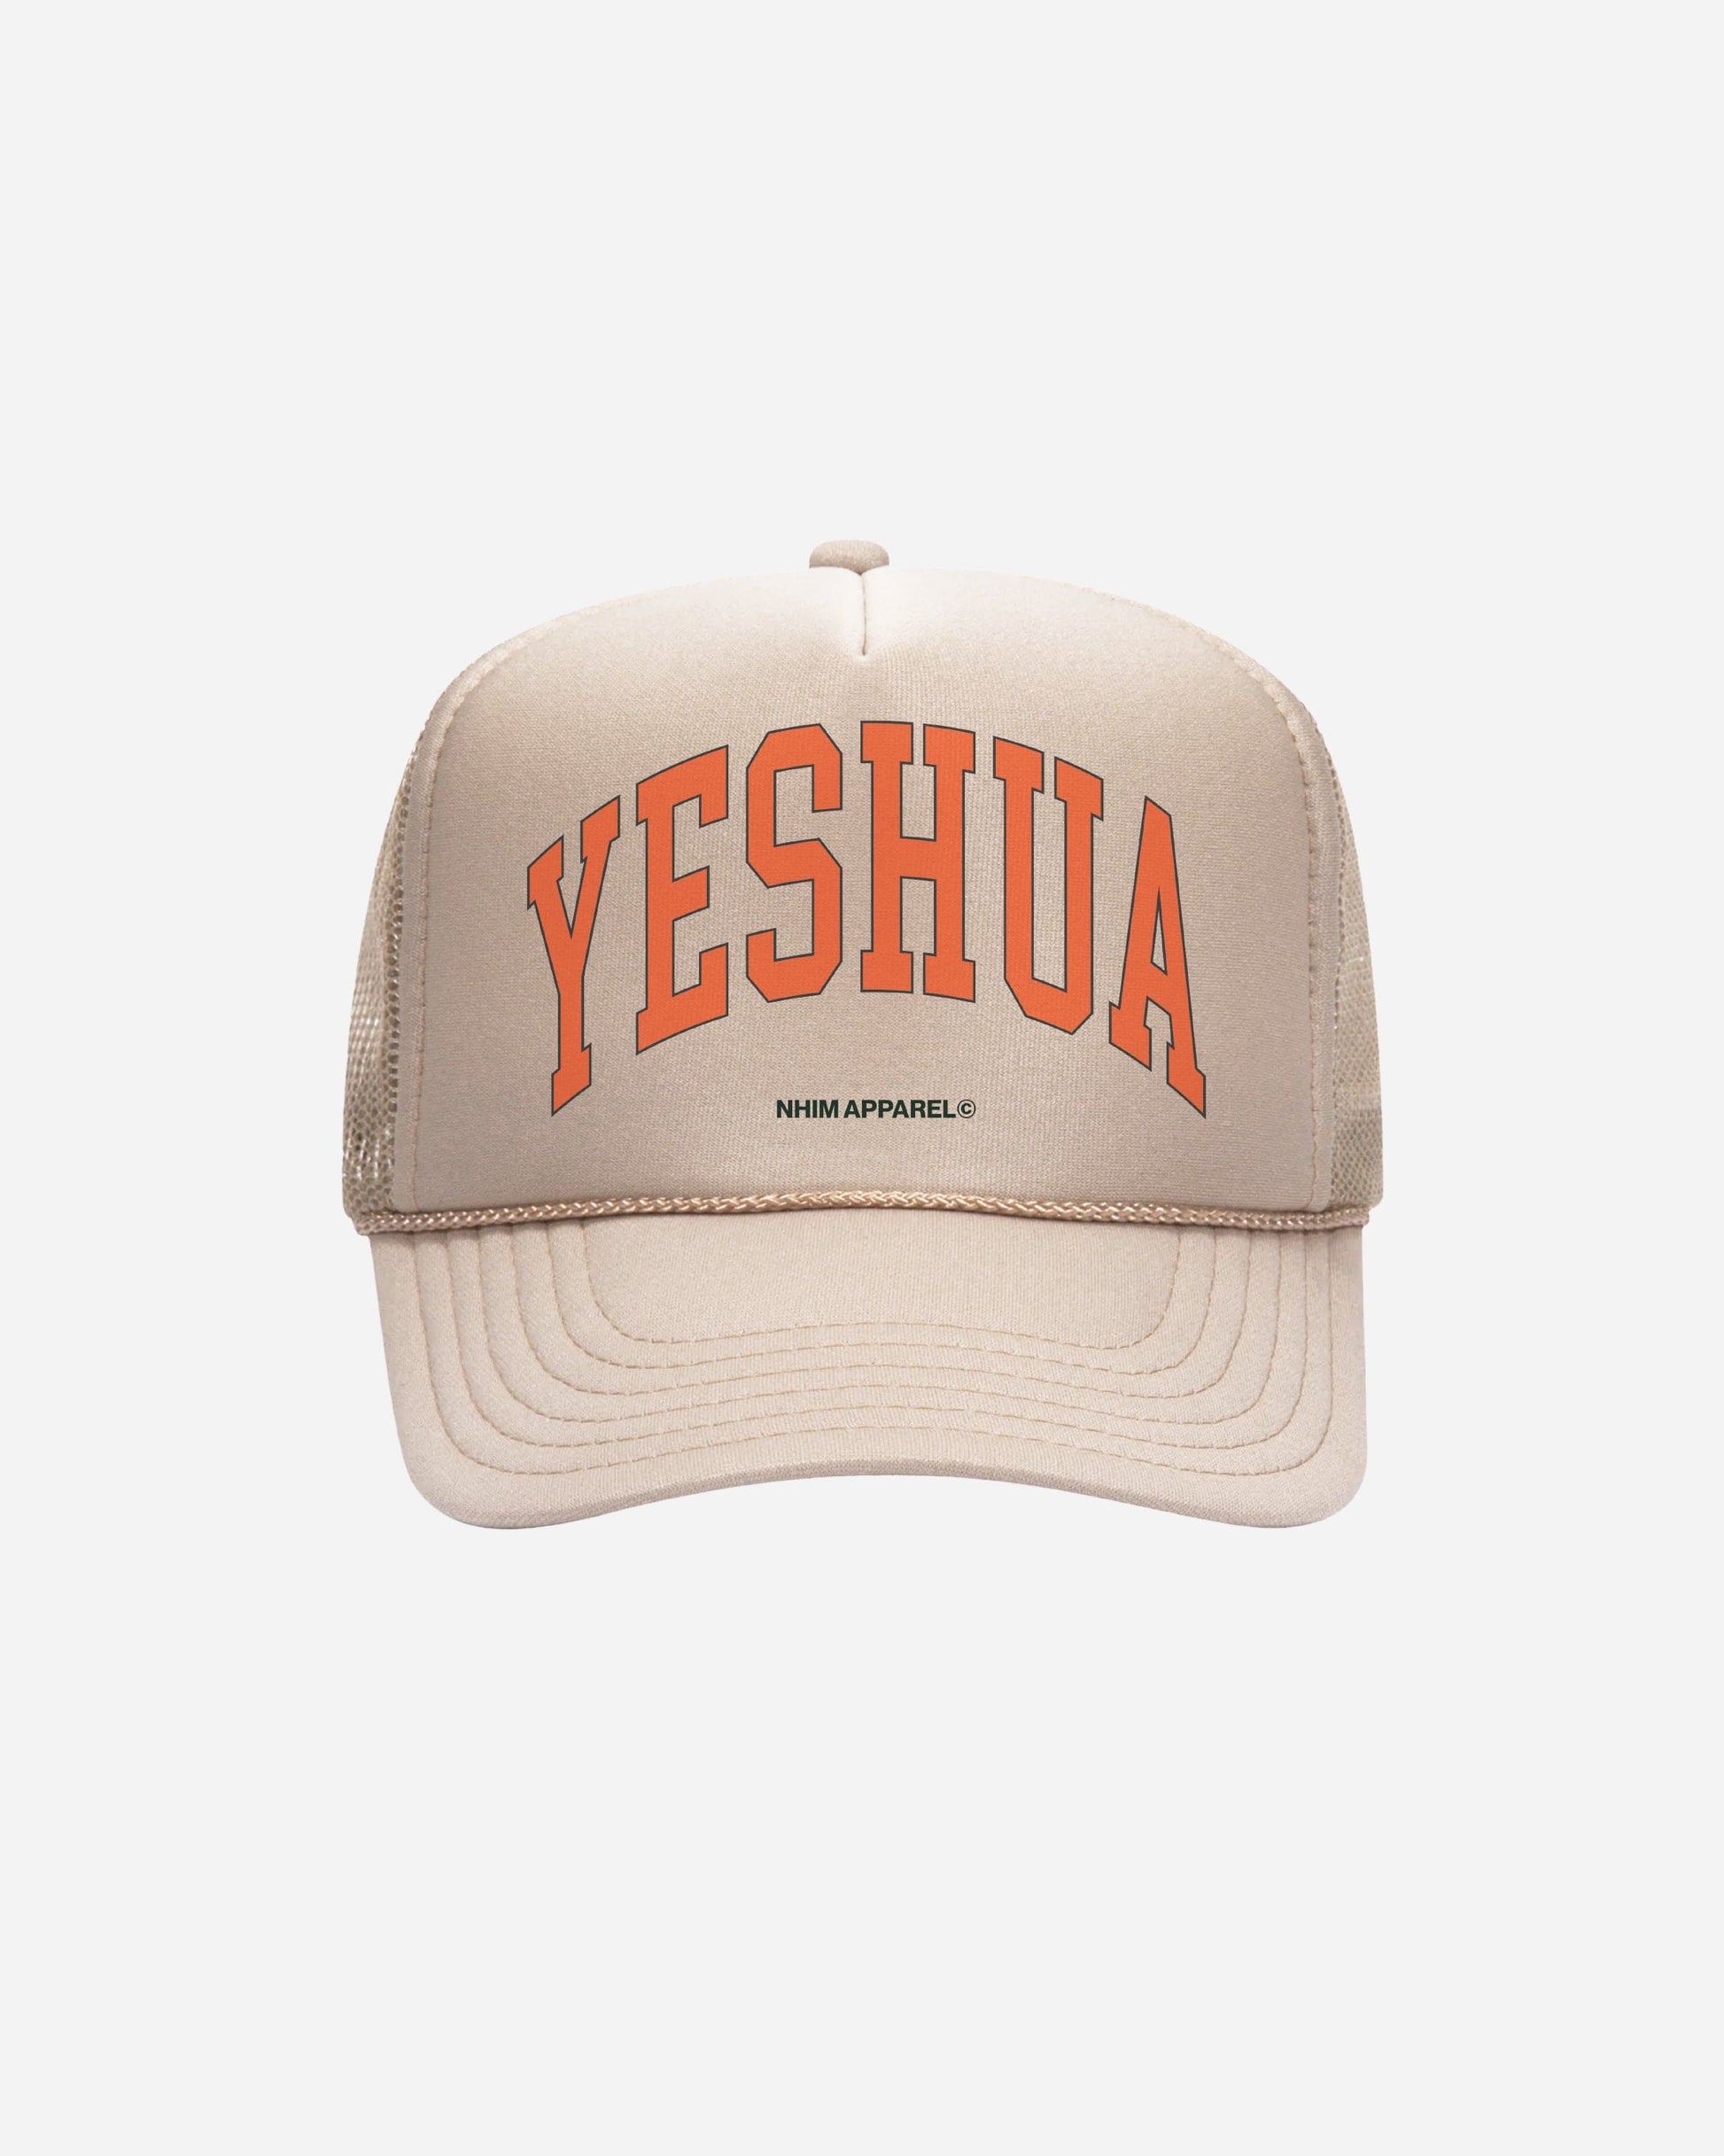 YESHUA Christian trucker hat from NHIM Apparel Christian Clothing Brand, khaki ha\t with orange writing